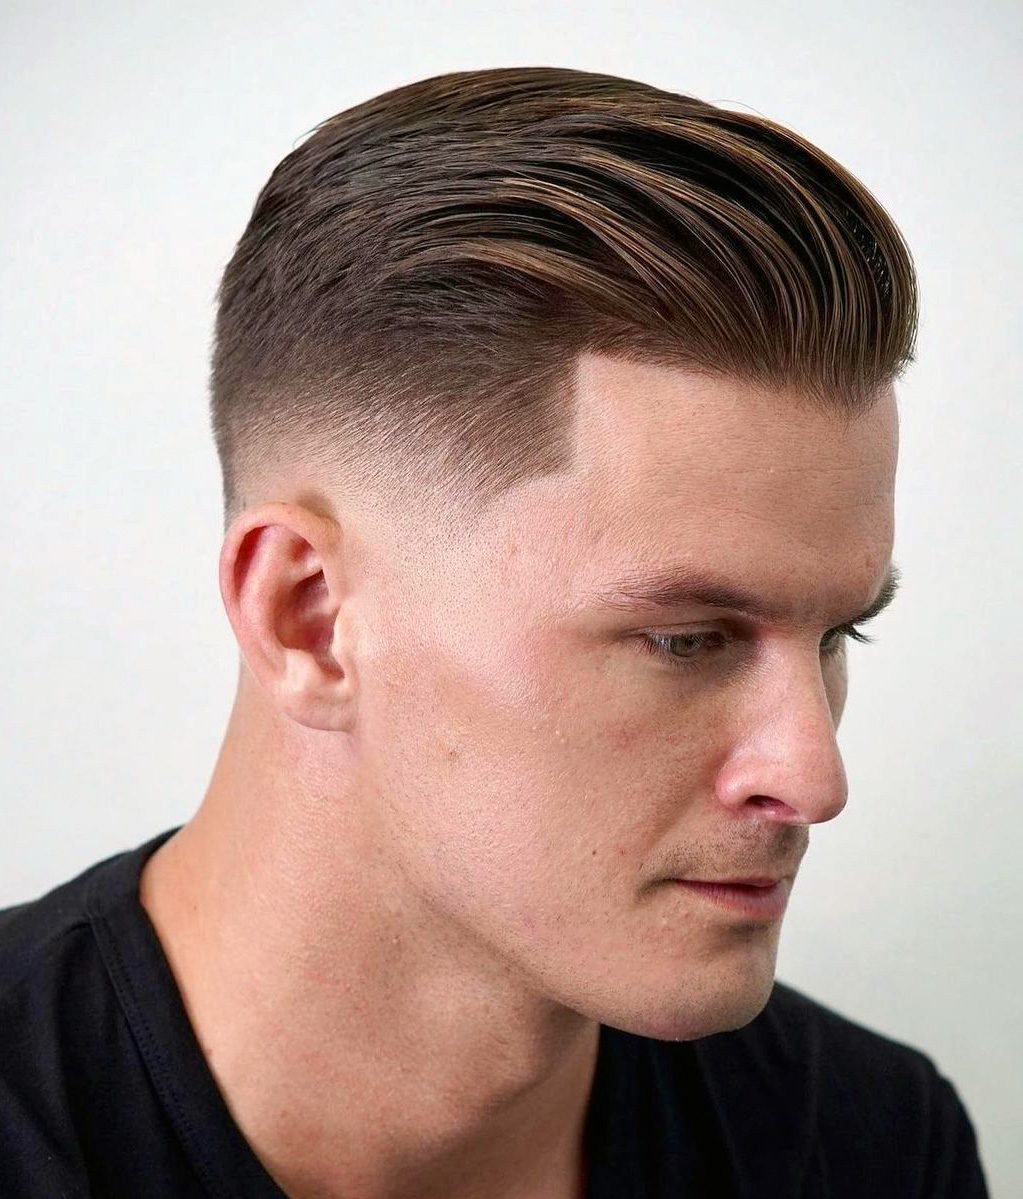 20 Most Universal White Boy Haircuts | Haircut Inspiration